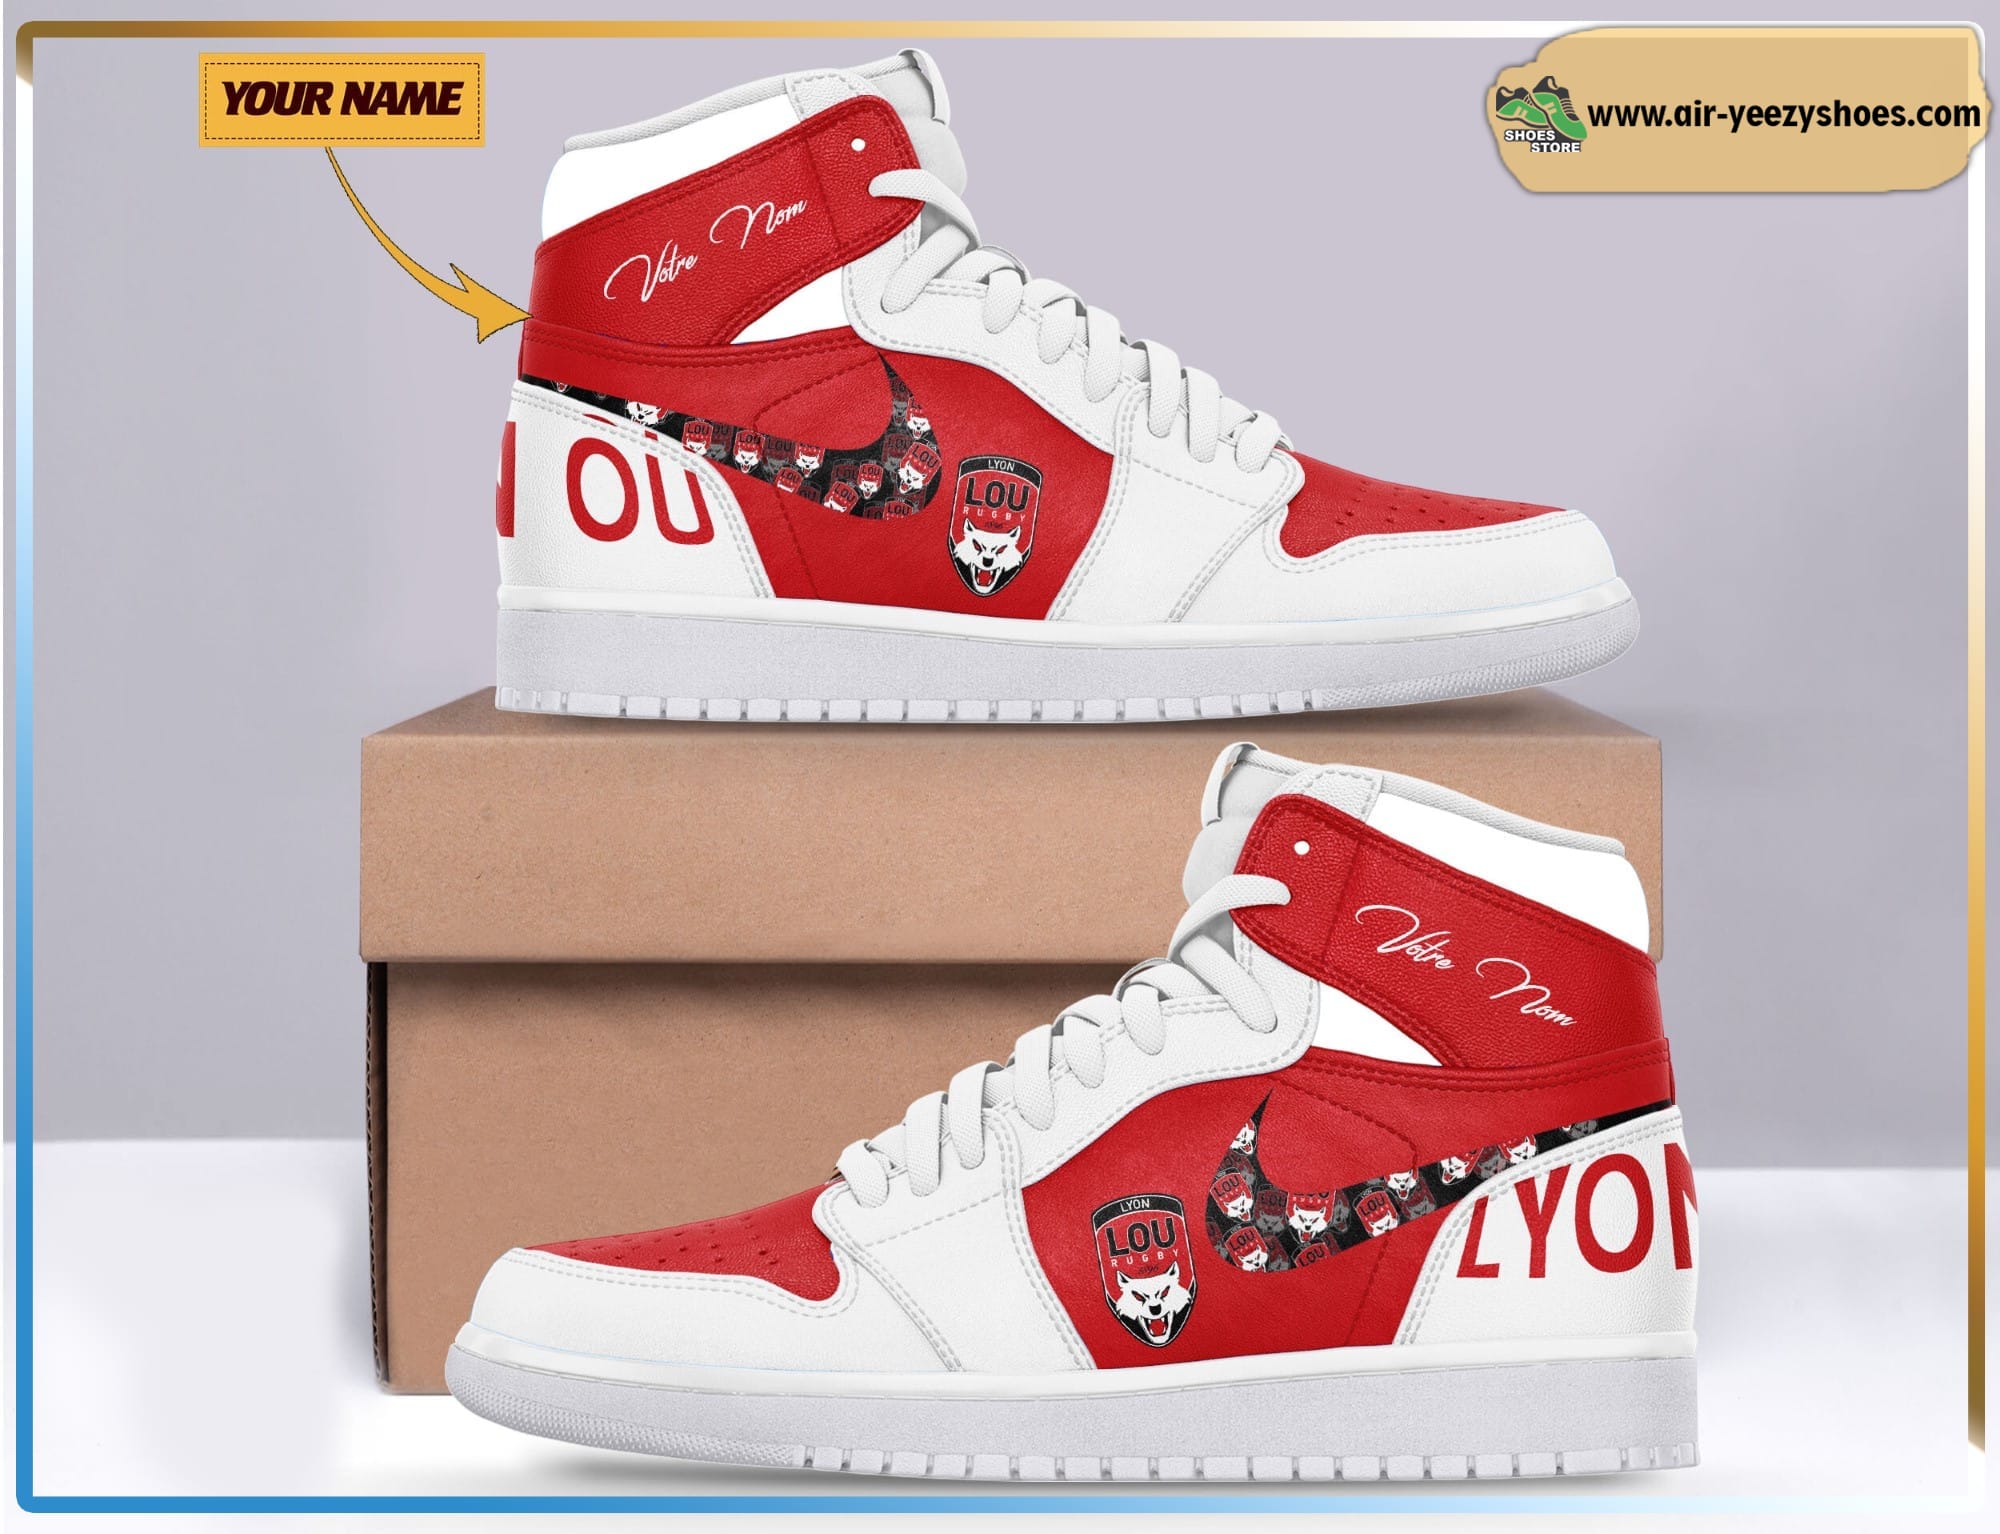 Lyon OU Air Jodan 1 High Top Sneaker Boots